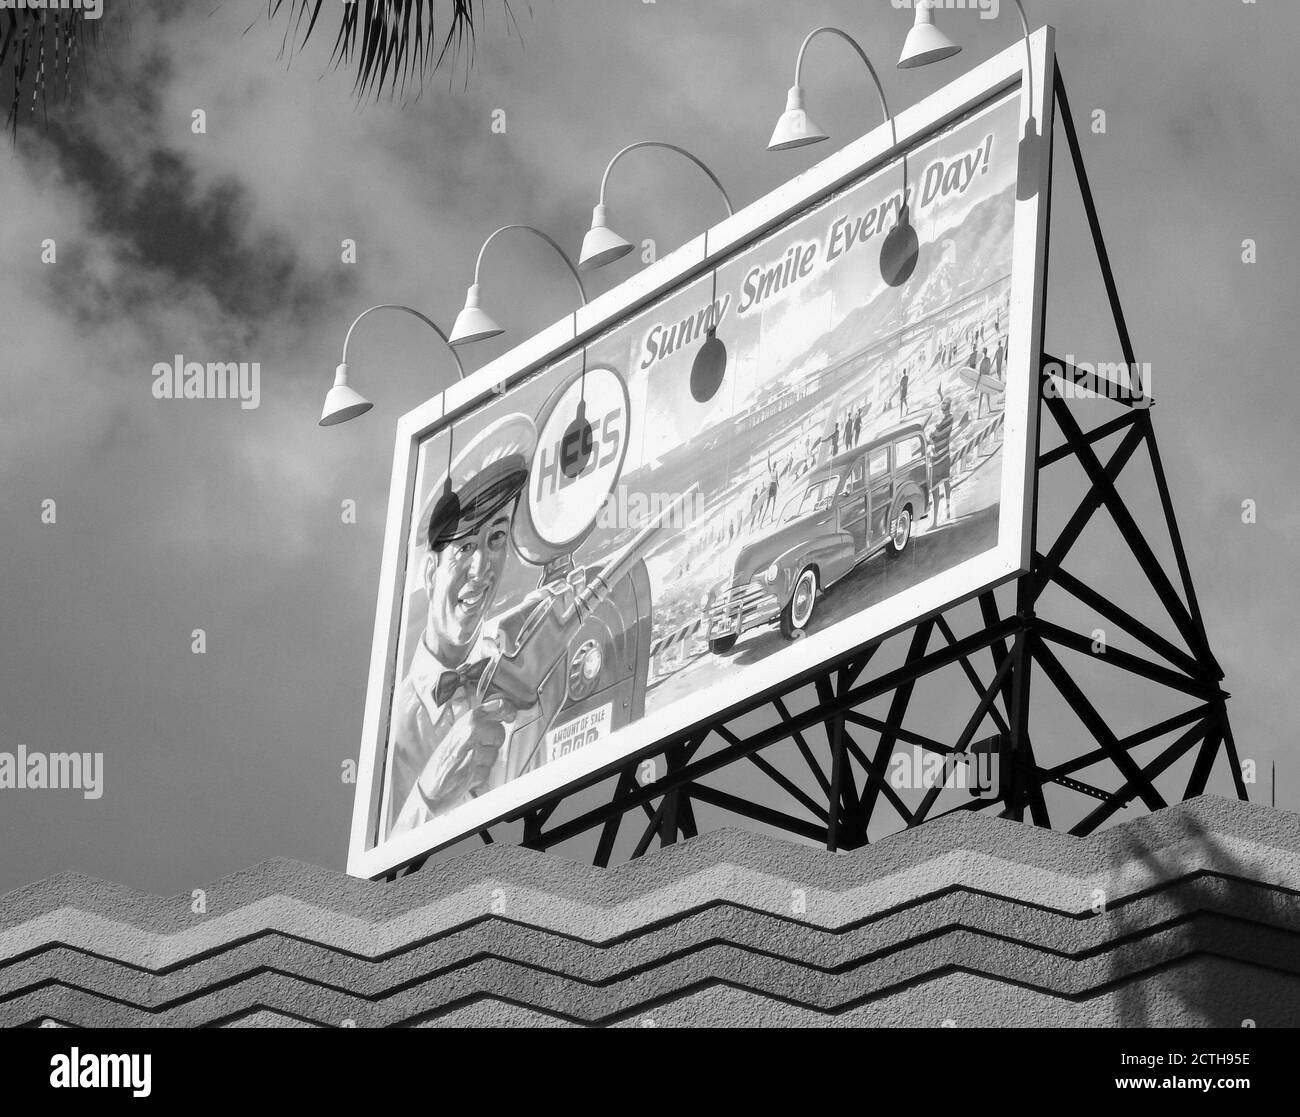 A vintage HESS Energy Company billboard advertisement in Hollywood Studios, Walt Disney World, Orlando, Florida, USA Stock Photo